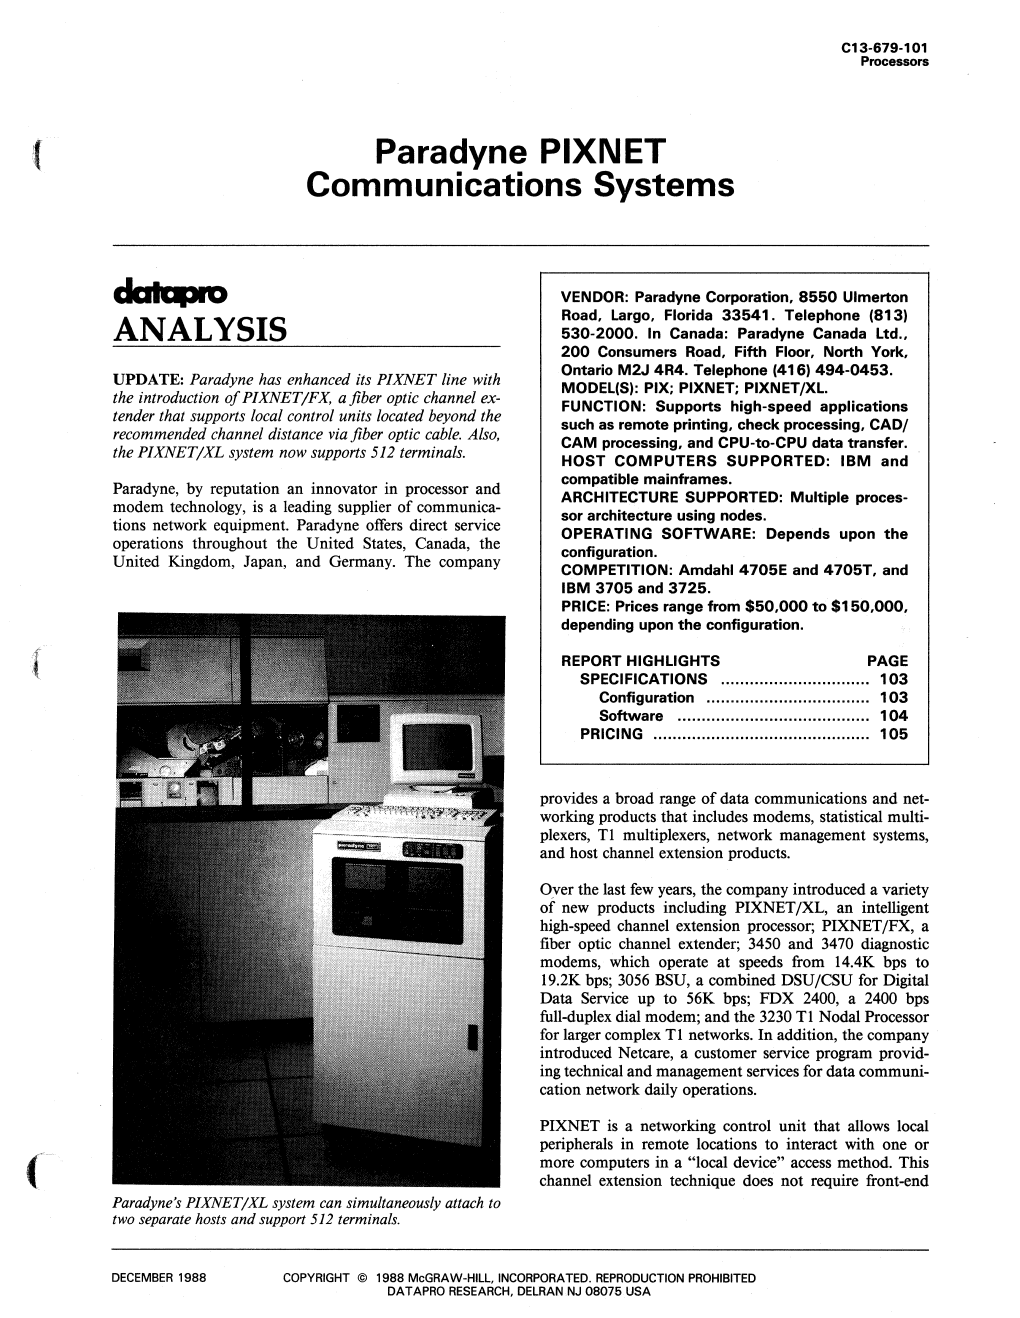 Paradyne PIXNET Communications Systems ANALYSIS